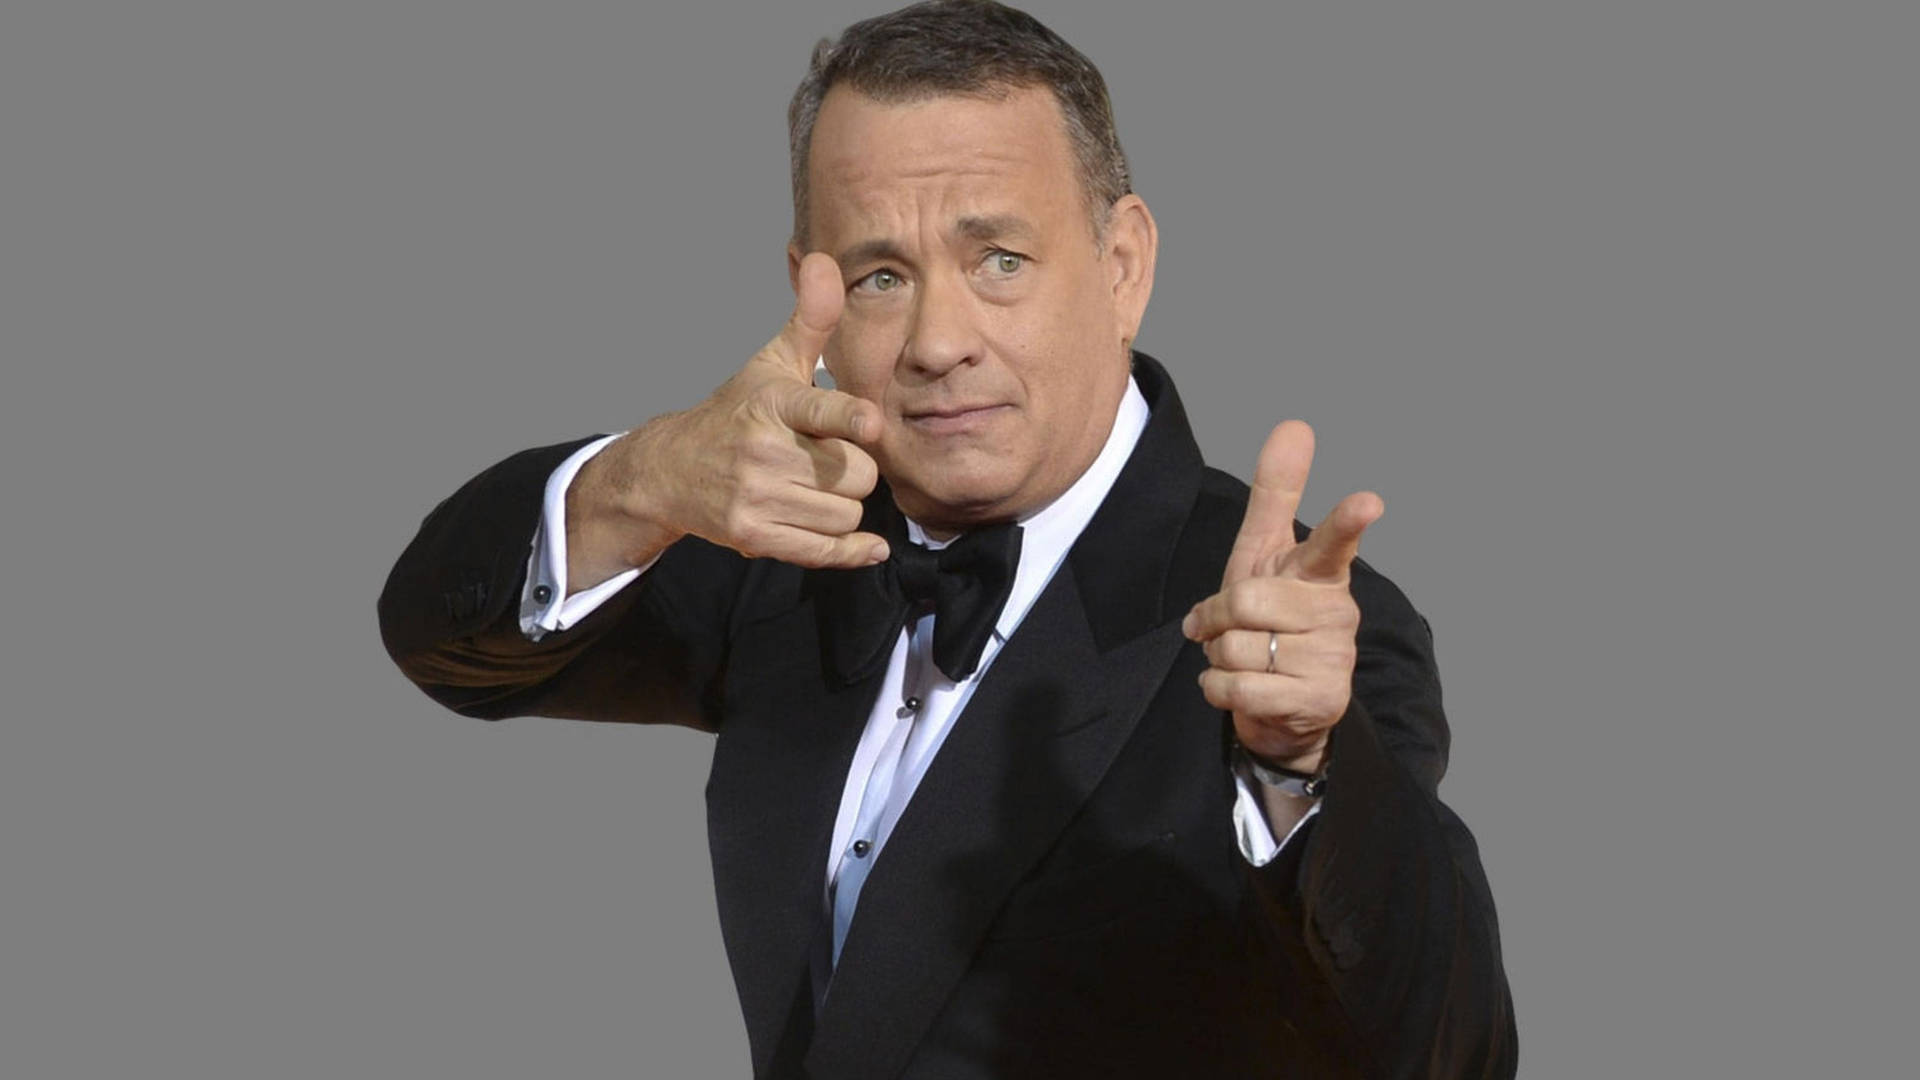 Tom Hanks Hand Gun Gesture